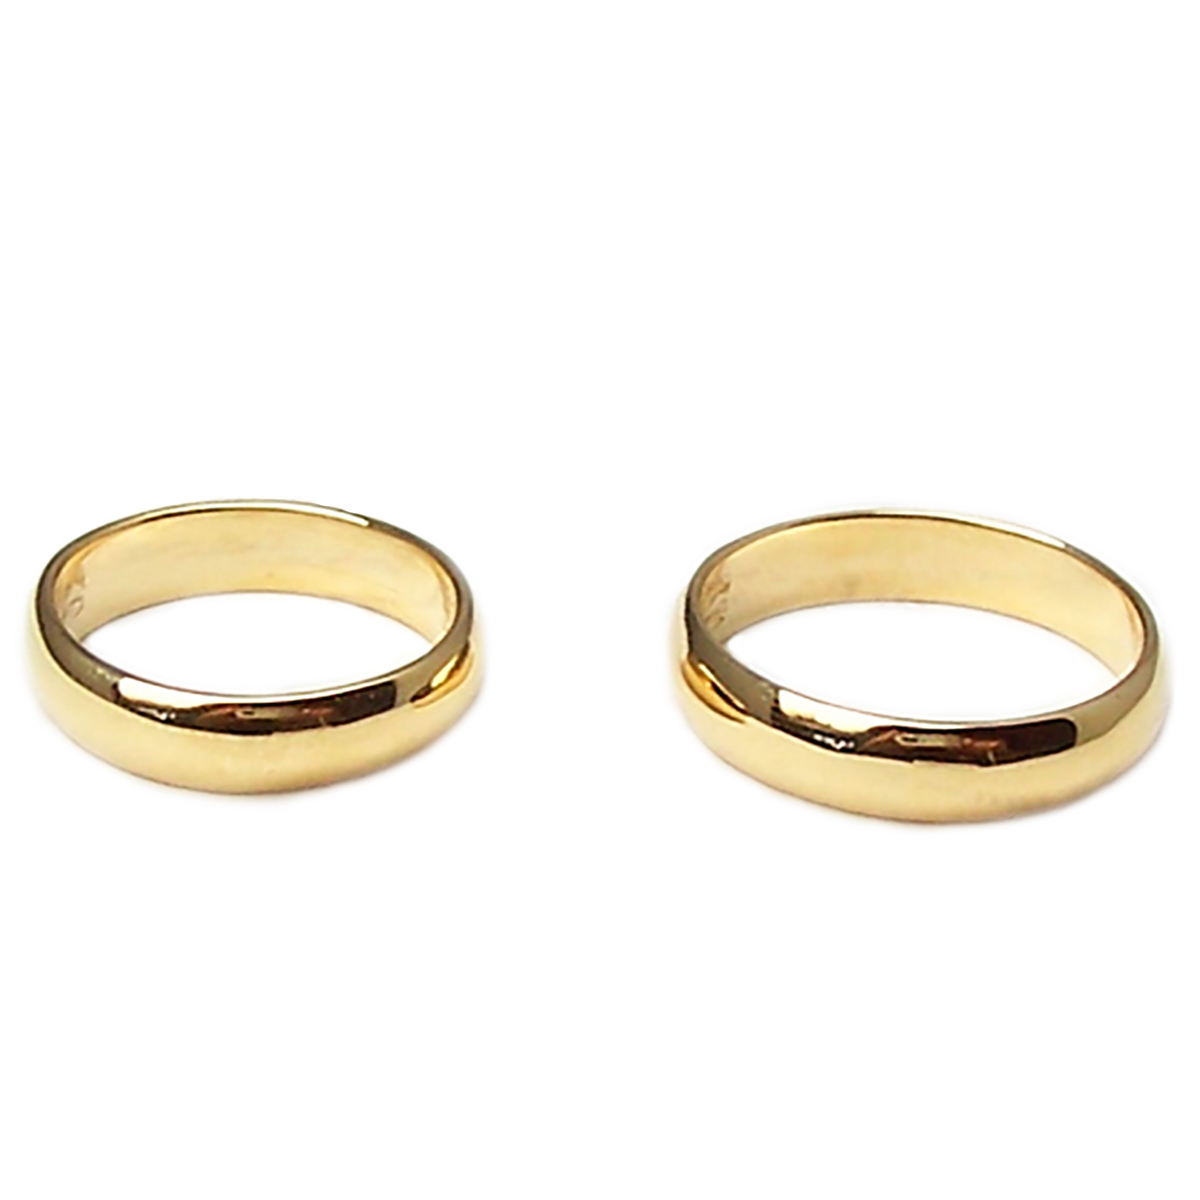 Anillos de boda para matrimonio en oro amarillo u oro blanco 5 mm Alianzas de boda anillo de pareja 2 p